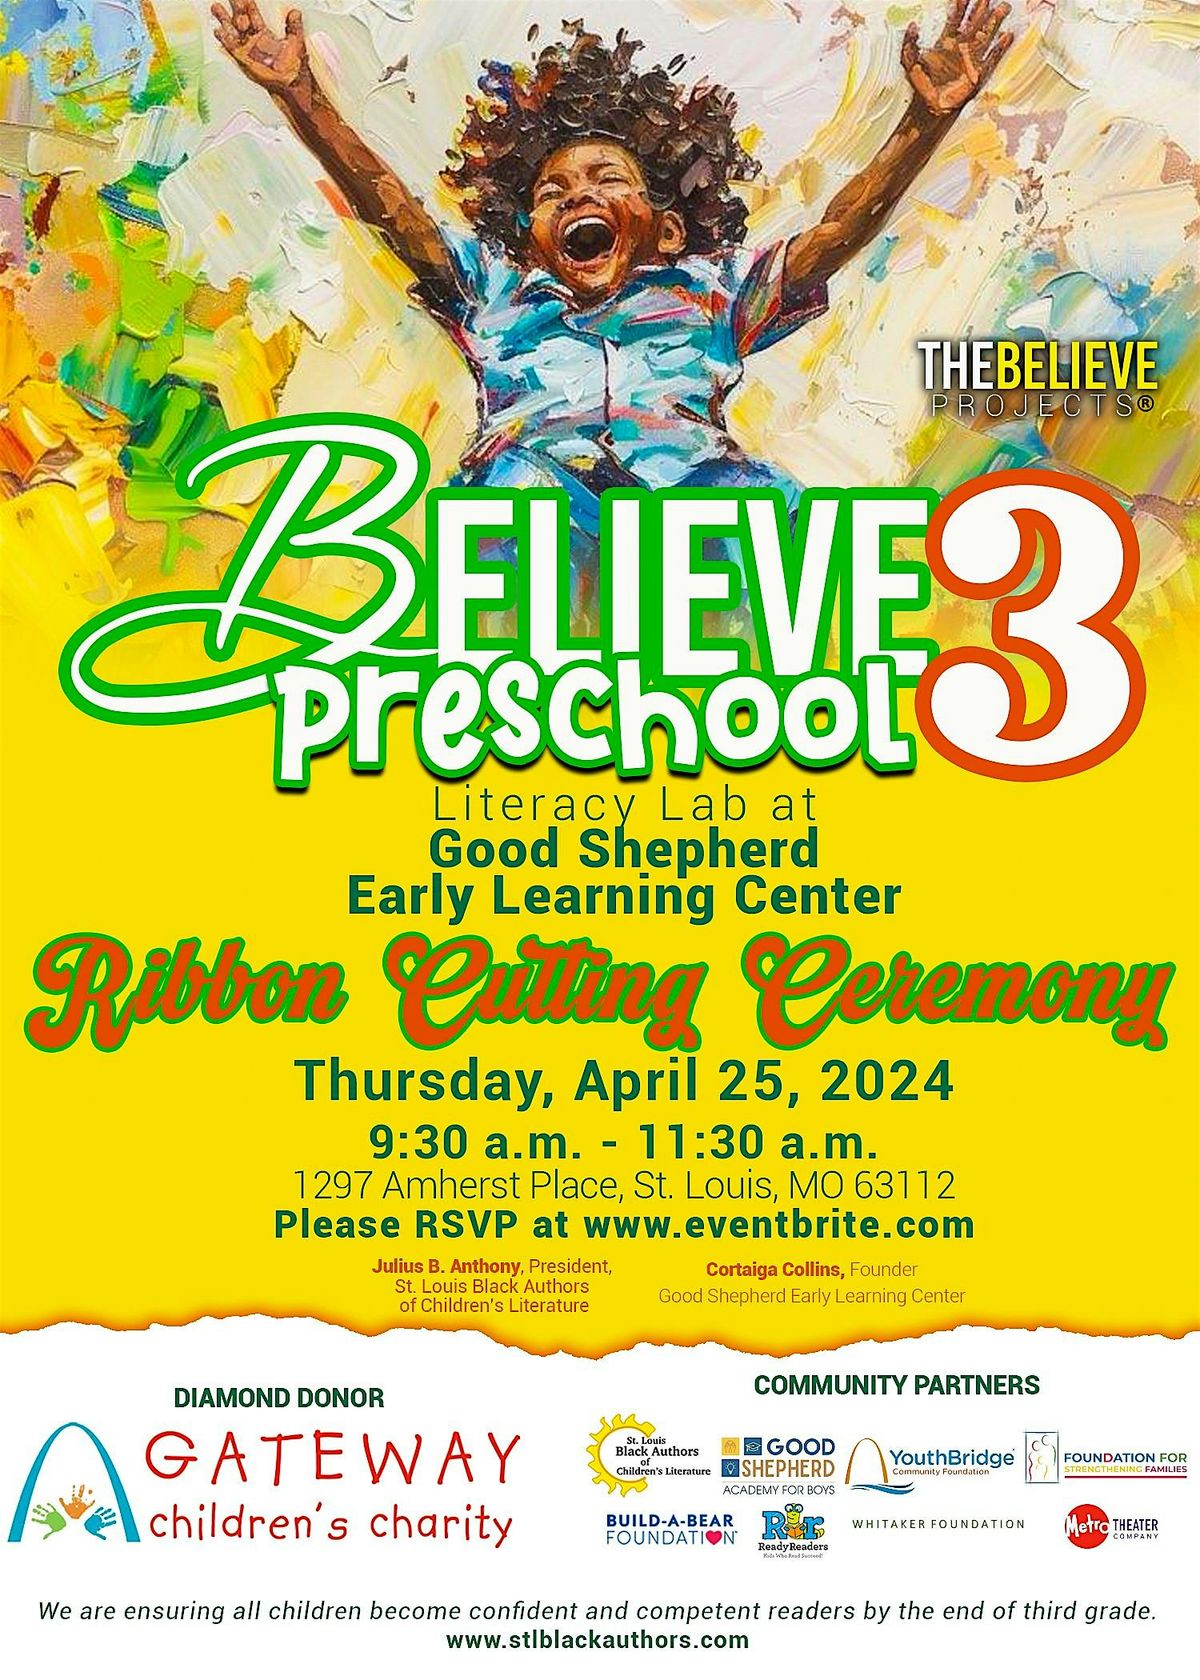 The Believe Preschool 3 Literacy Lab at Good Shepherd Early Learning Center